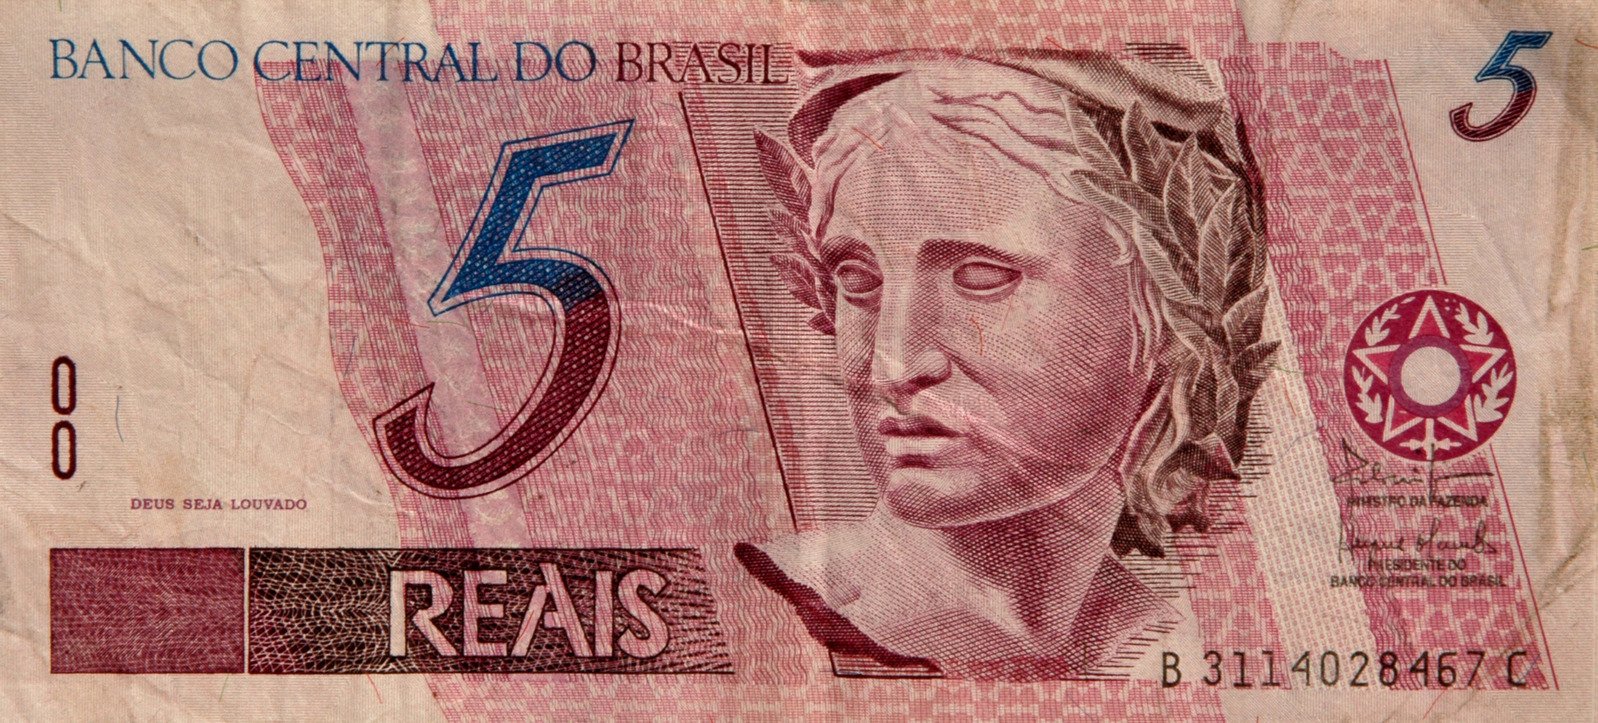 a five euros bill is seen here